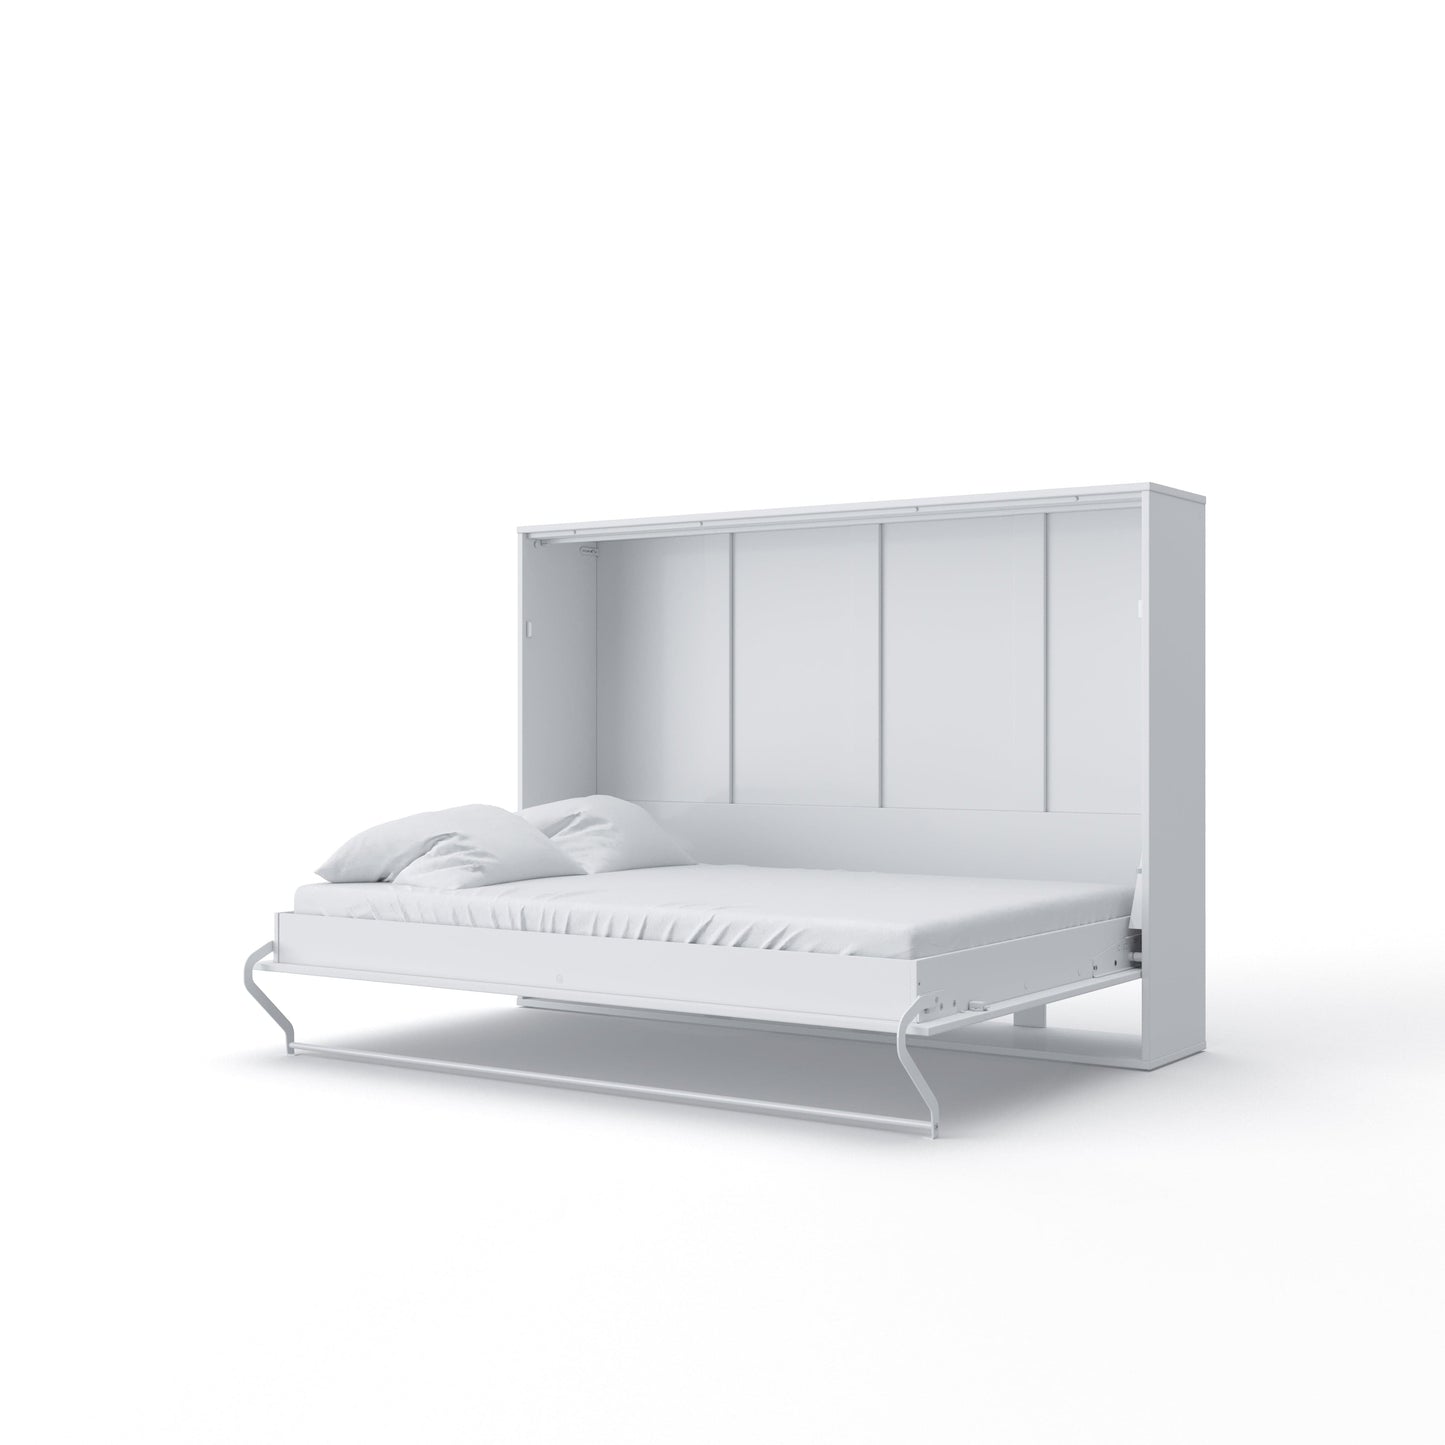 Maxima House Horizontal Murphy Bed INVENTO, European Full XL Size with mattress